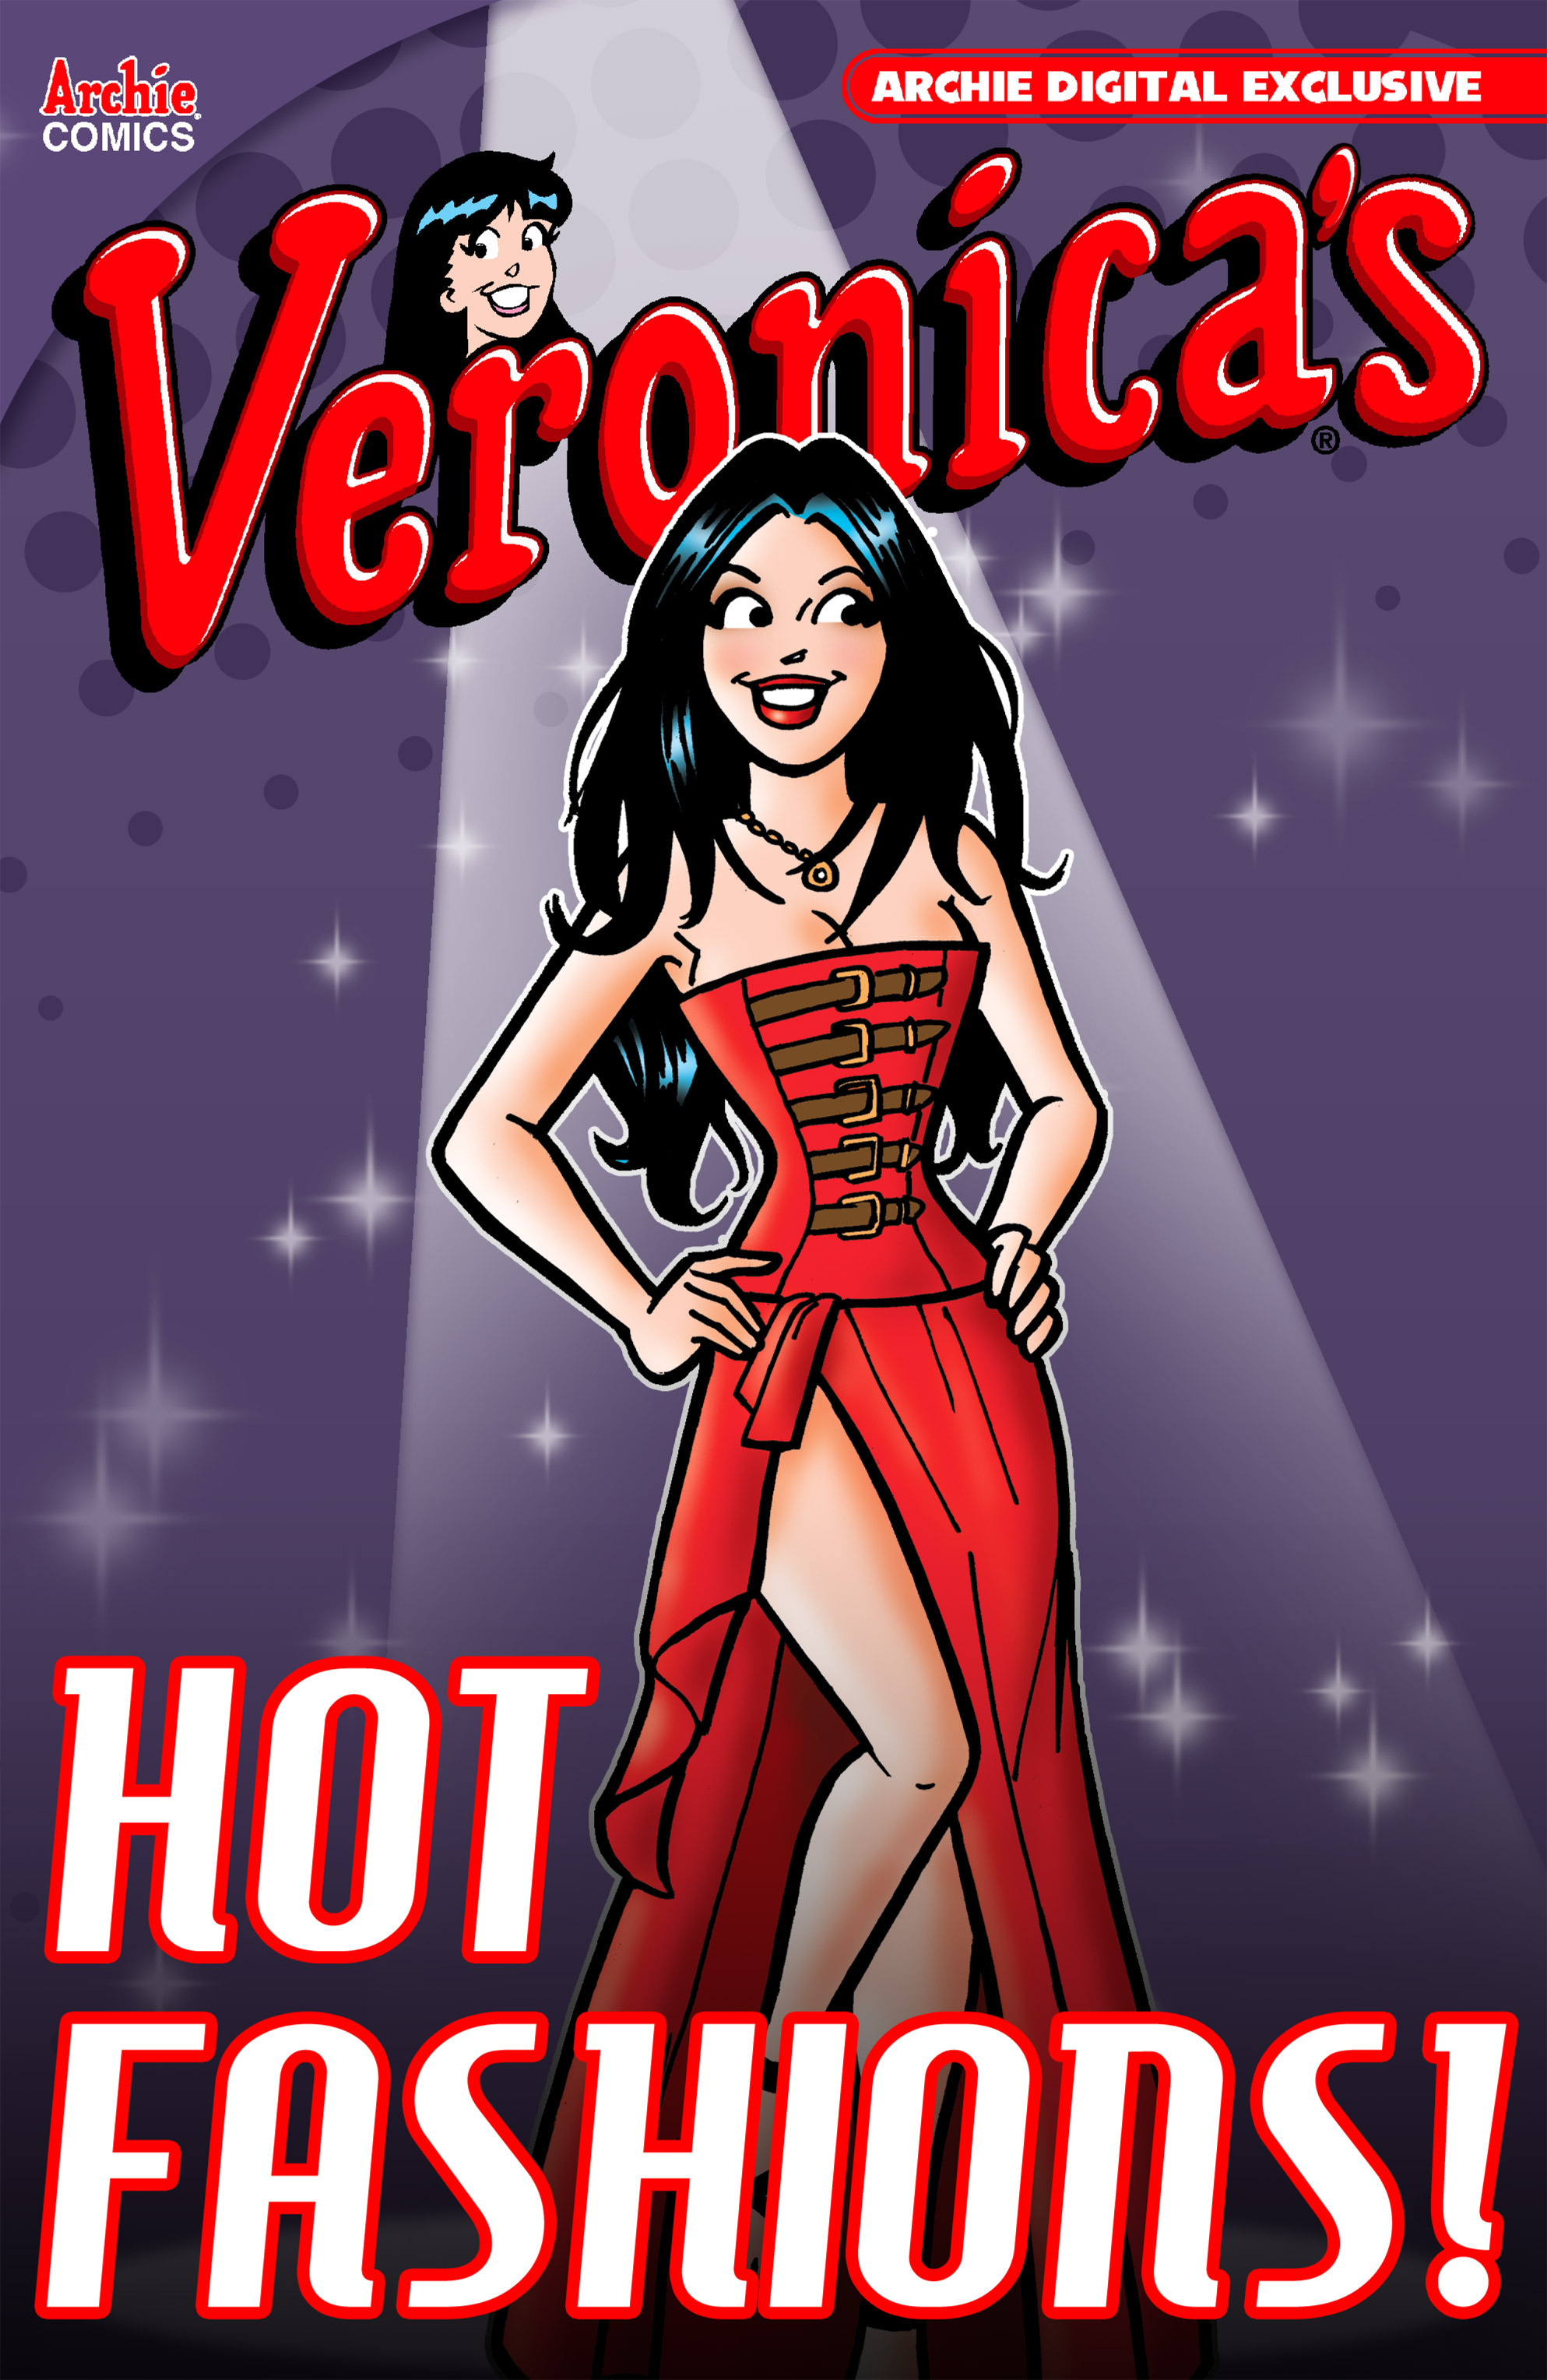 Veronica S Hot Fashions Readallcomics